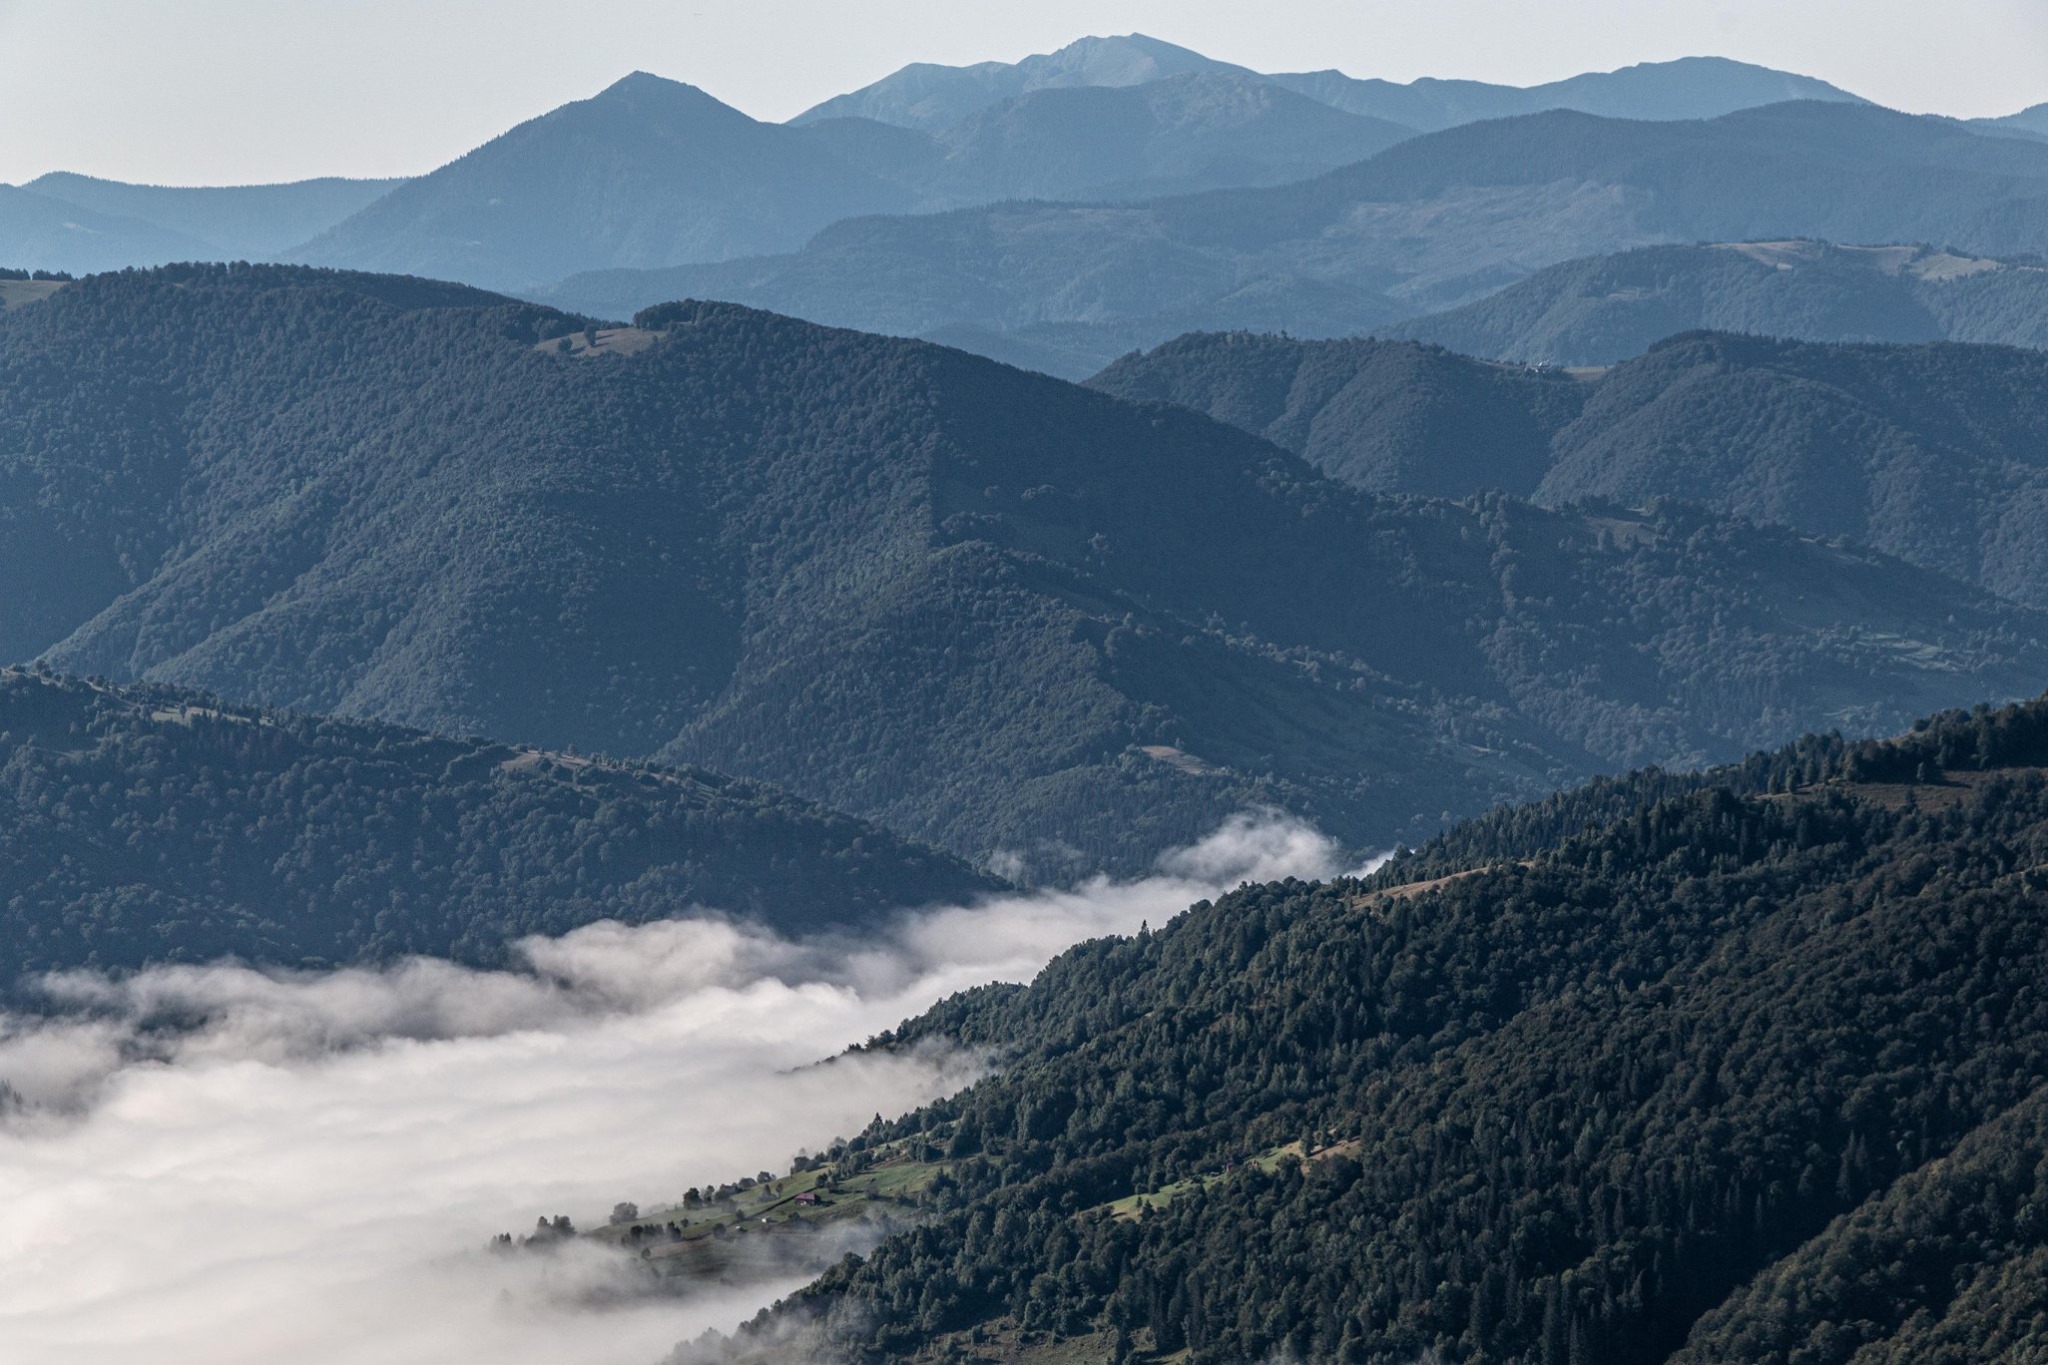 Výhled na Maramoroskyj masiv z hory Bliznica. Autor fotografii: Robert Erik.